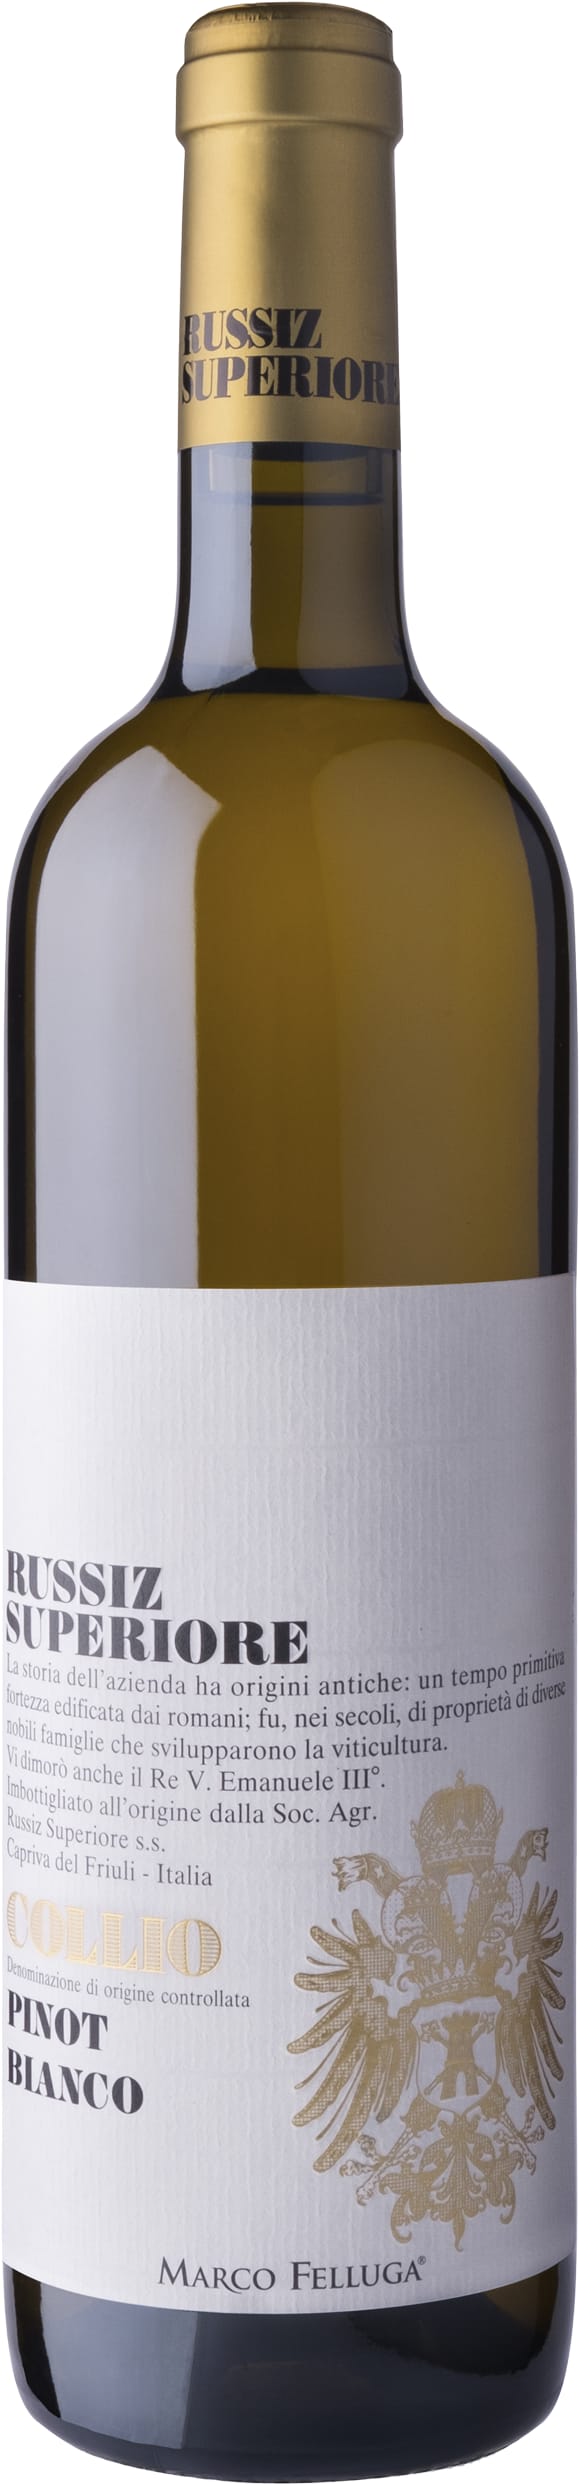 Russiz Superiore Pinot Bianco, Collio 2021 75cl - Buy Russiz Superiore Wines from GREAT WINES DIRECT wine shop